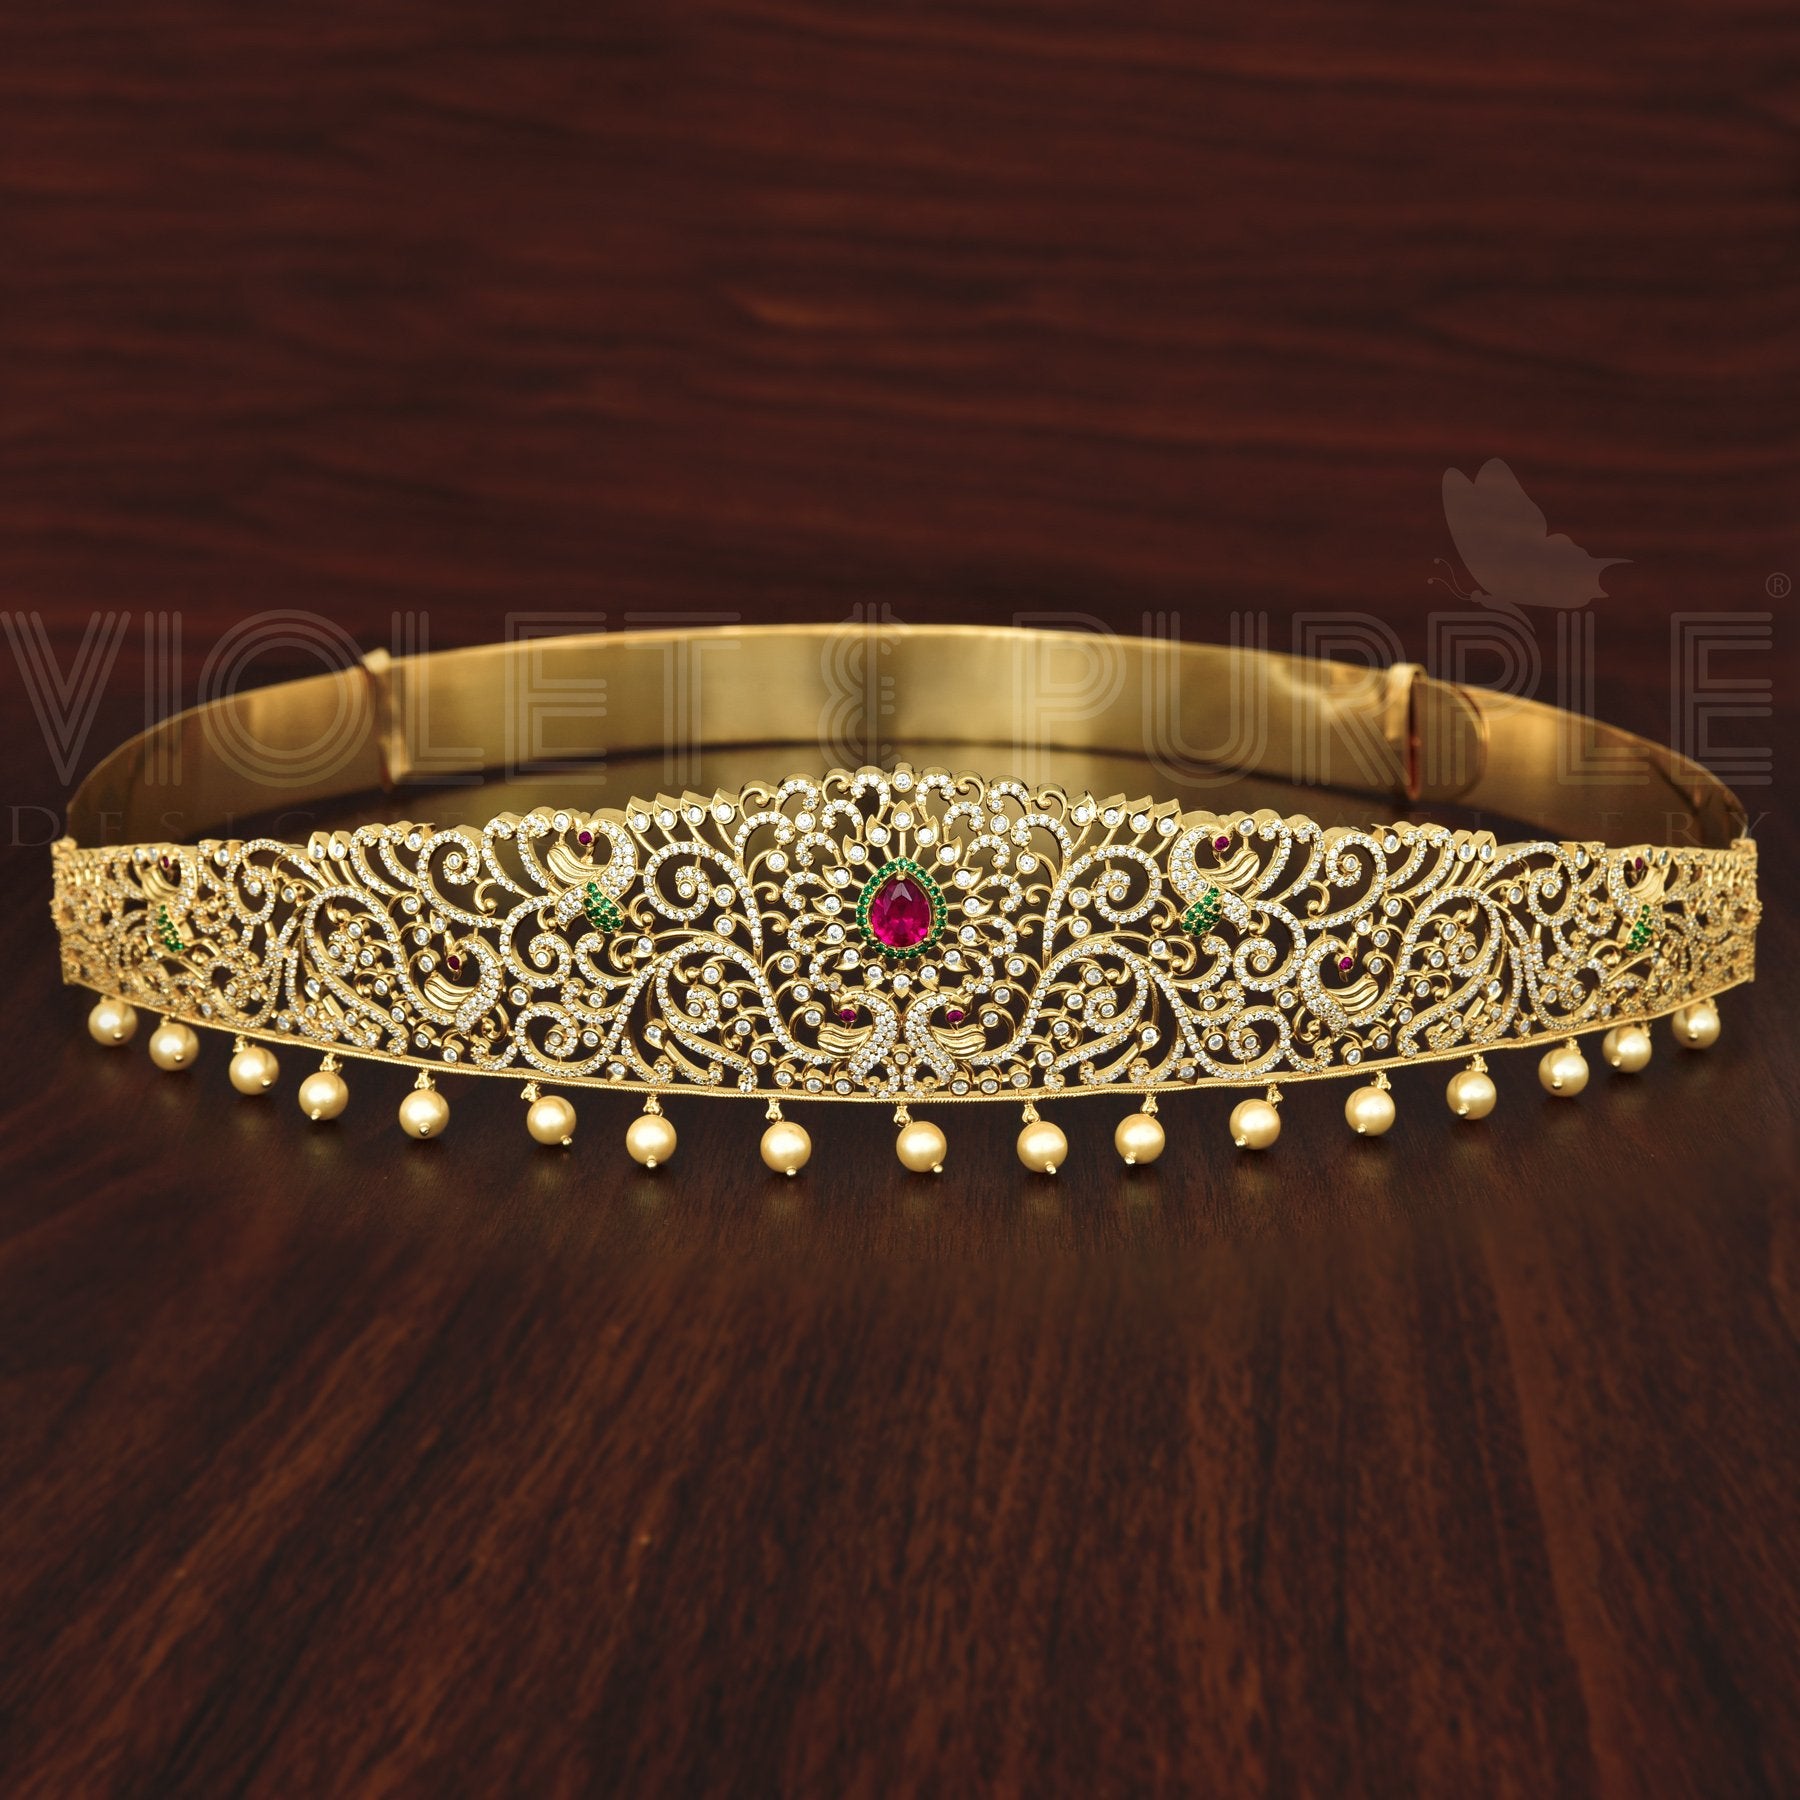 Photo of Diamond bridal jewellery with waist belt and gold kanjivaram